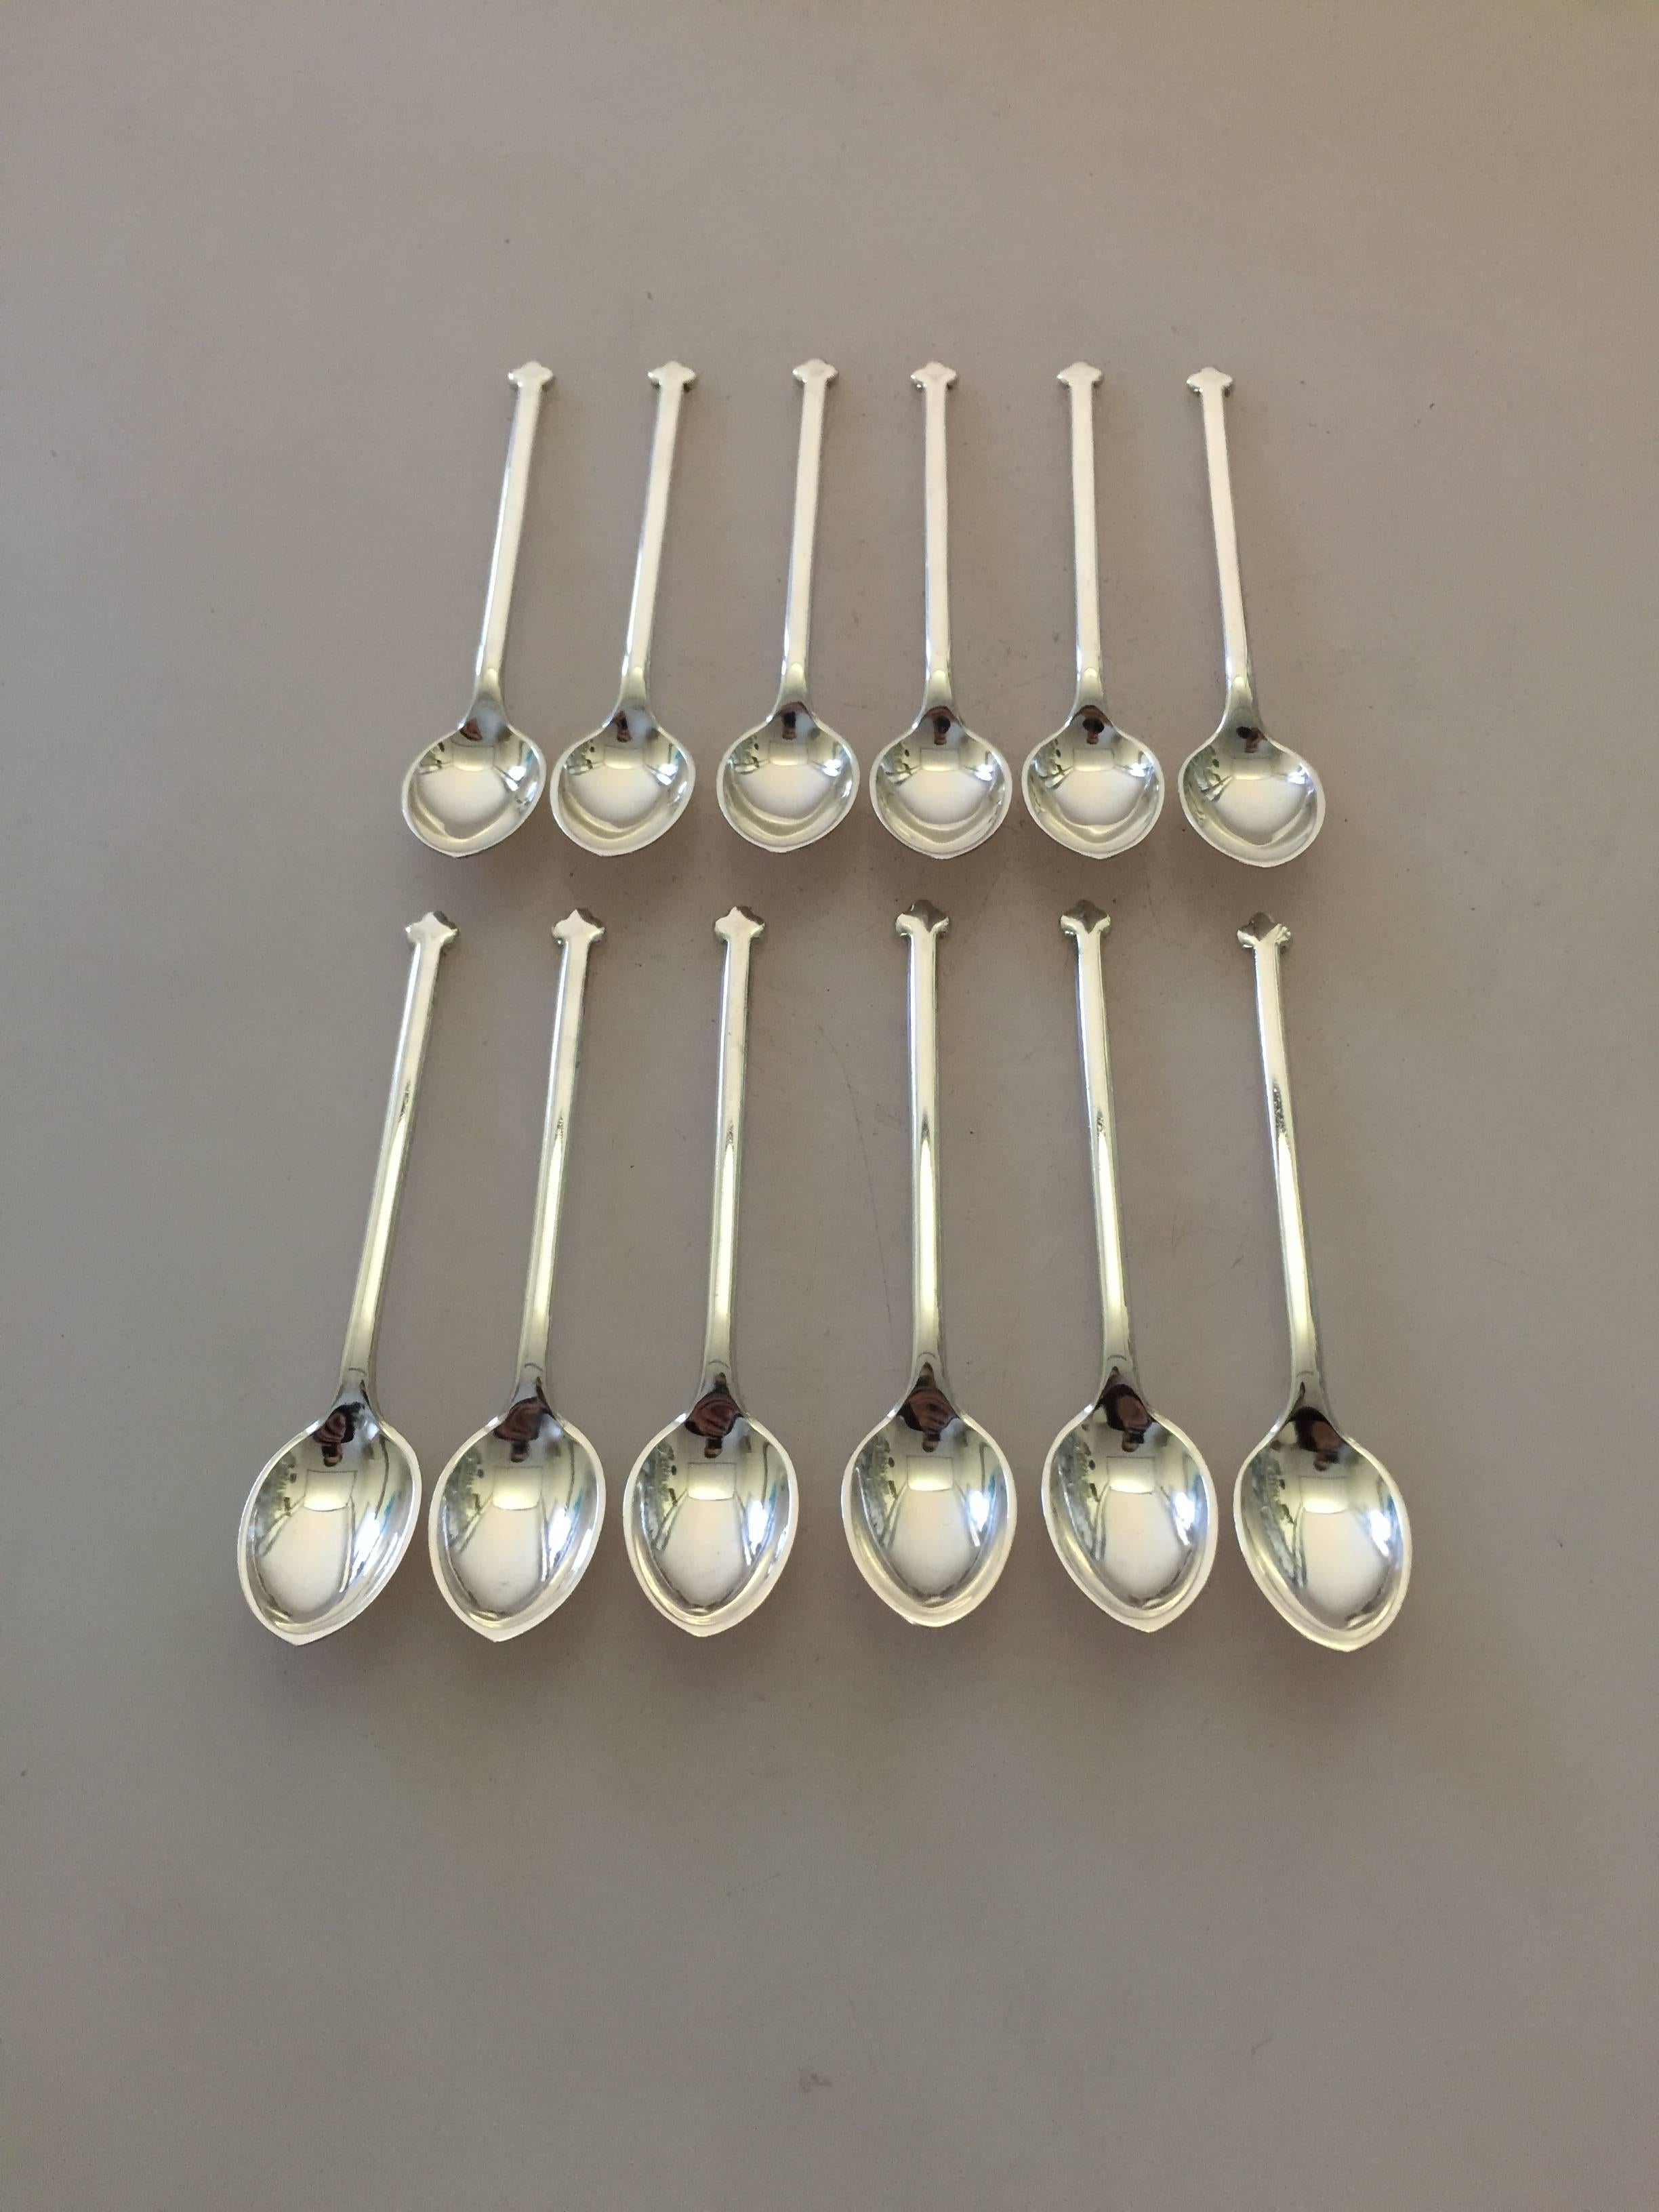 12 x Hans Hansen sterling silver coffee spoons designed by Karl Gustav Hansen. All in good condition.

Measures 10 cm L.